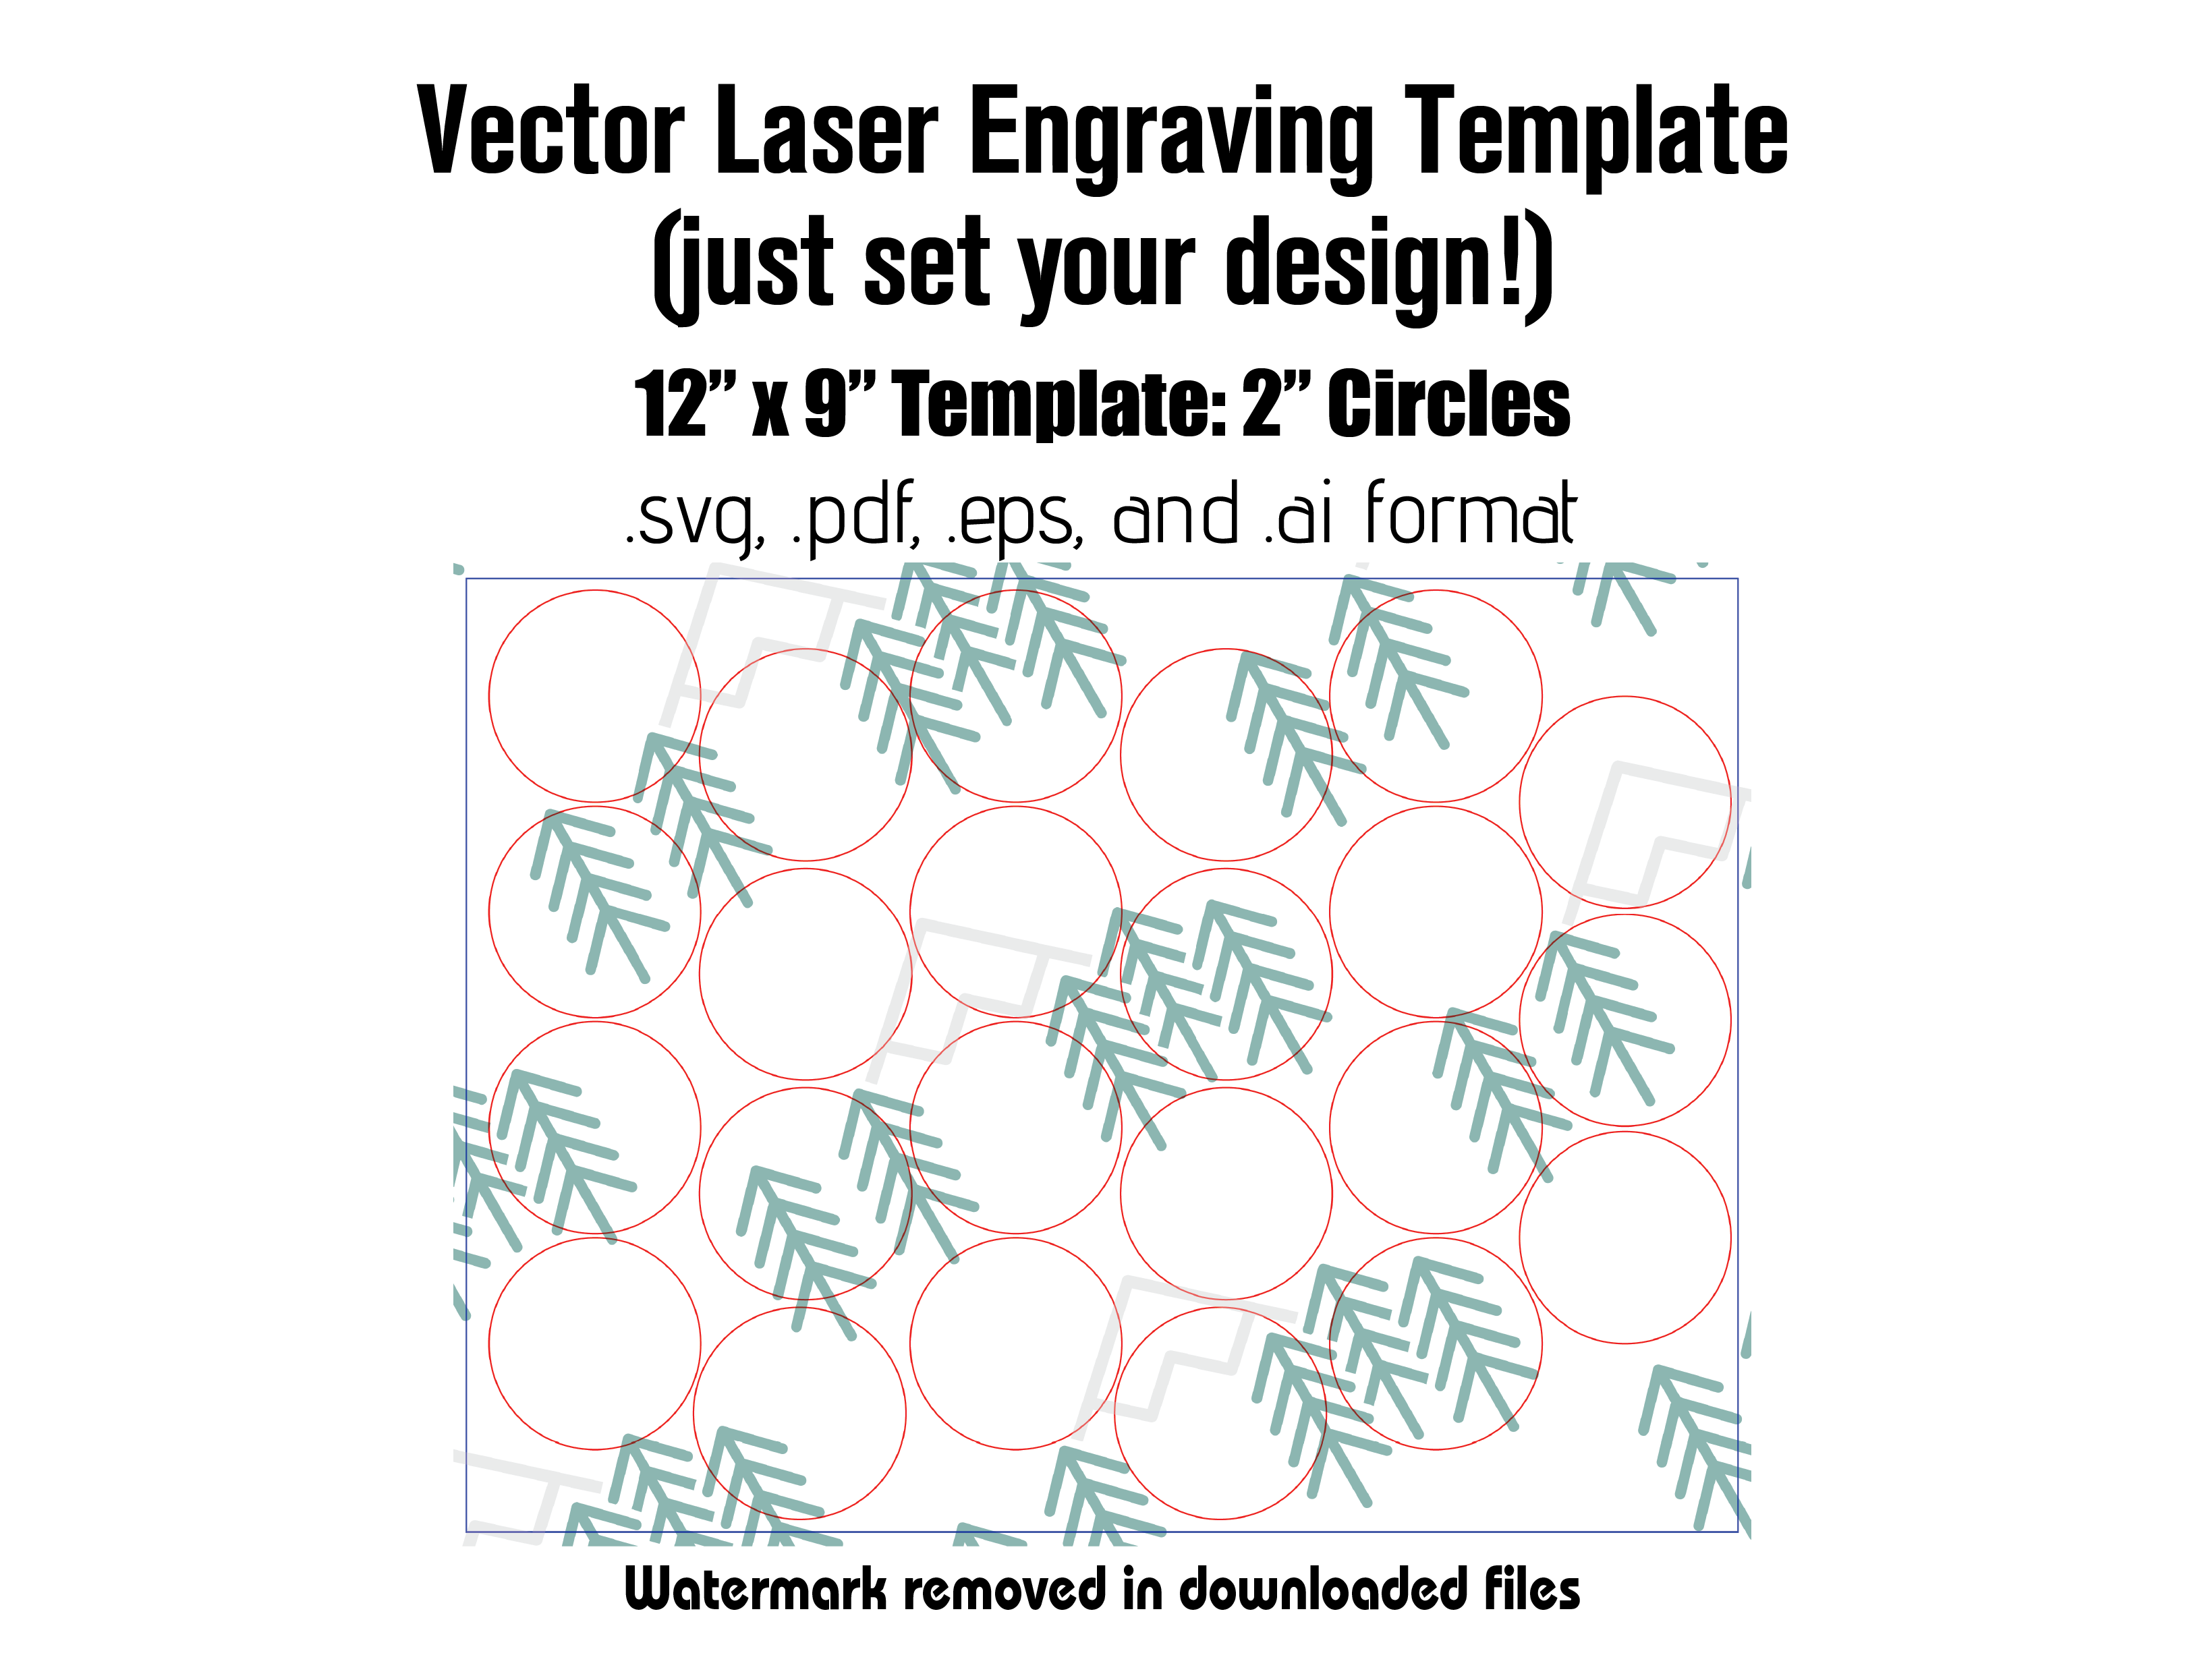 Digital Laser Cutting Template: 2" Circles - 12" x 9" Sheet Size Digital Laser Engraving Files Craftworks NW 